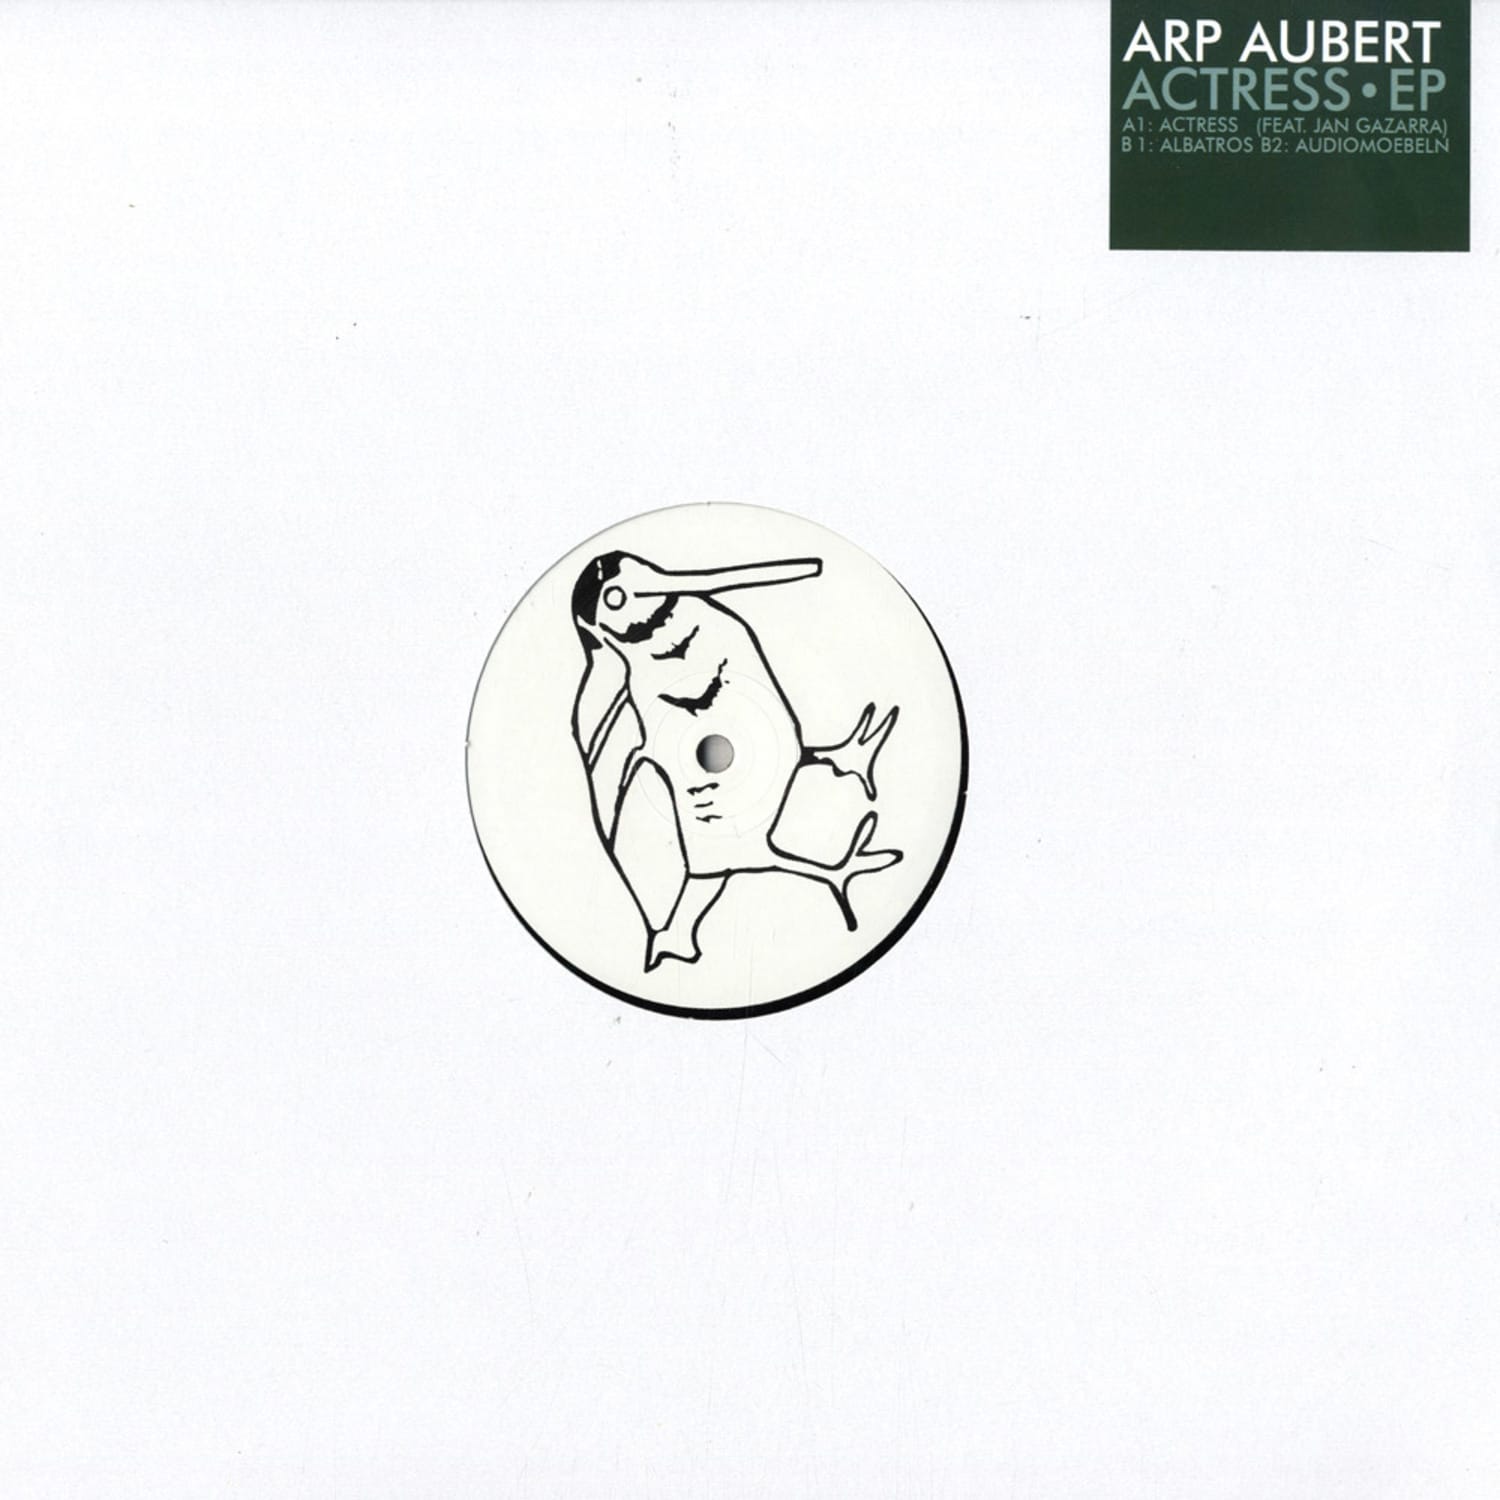 ARP Aubert - ACTRESS EP